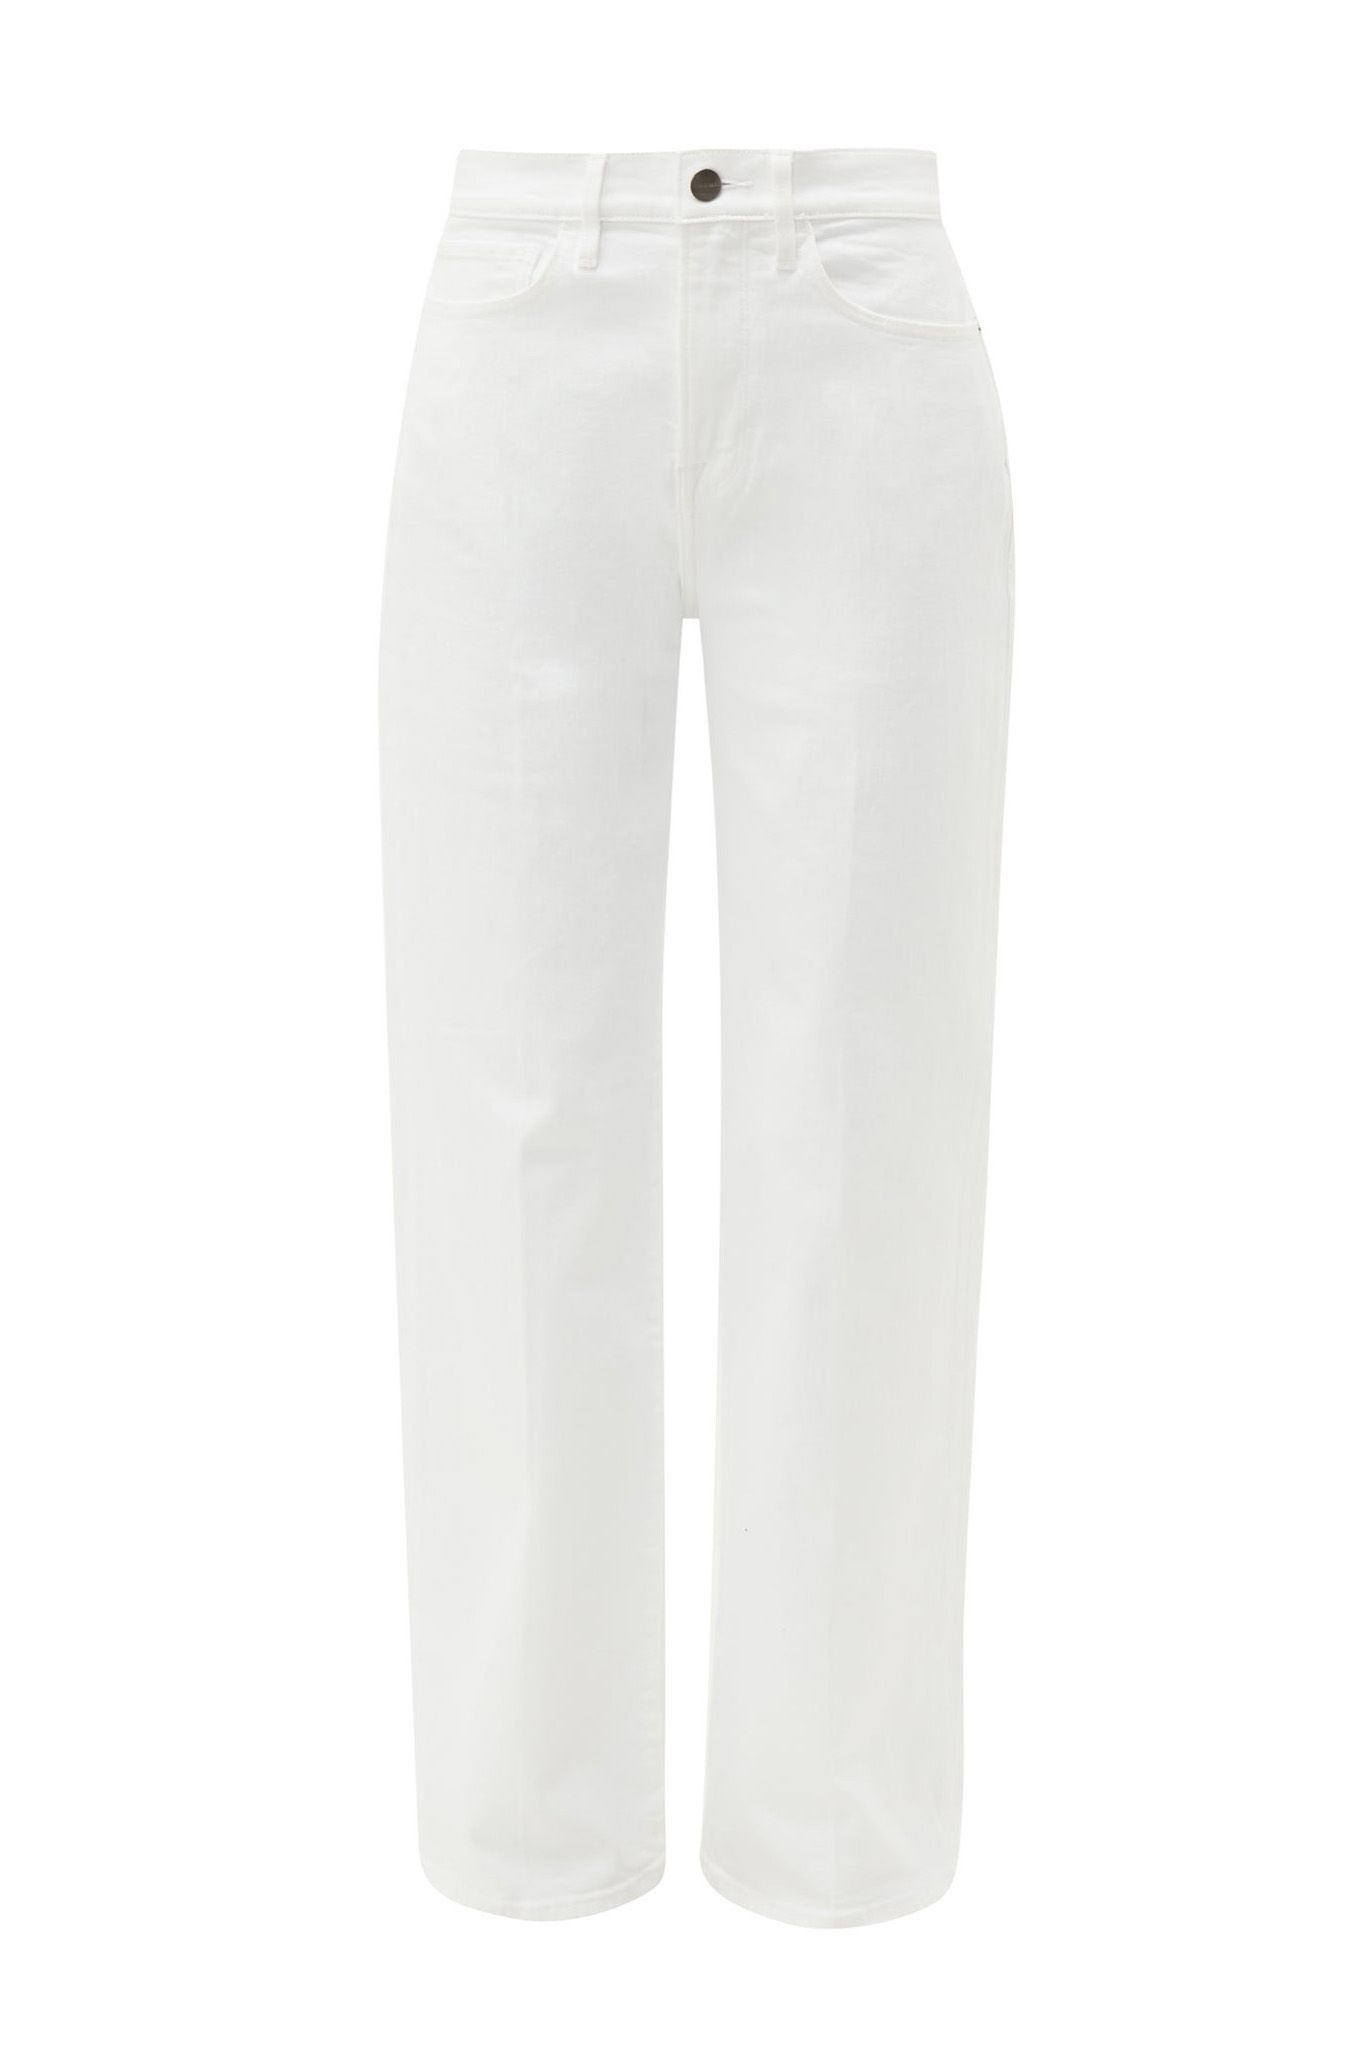 cotton jeans white